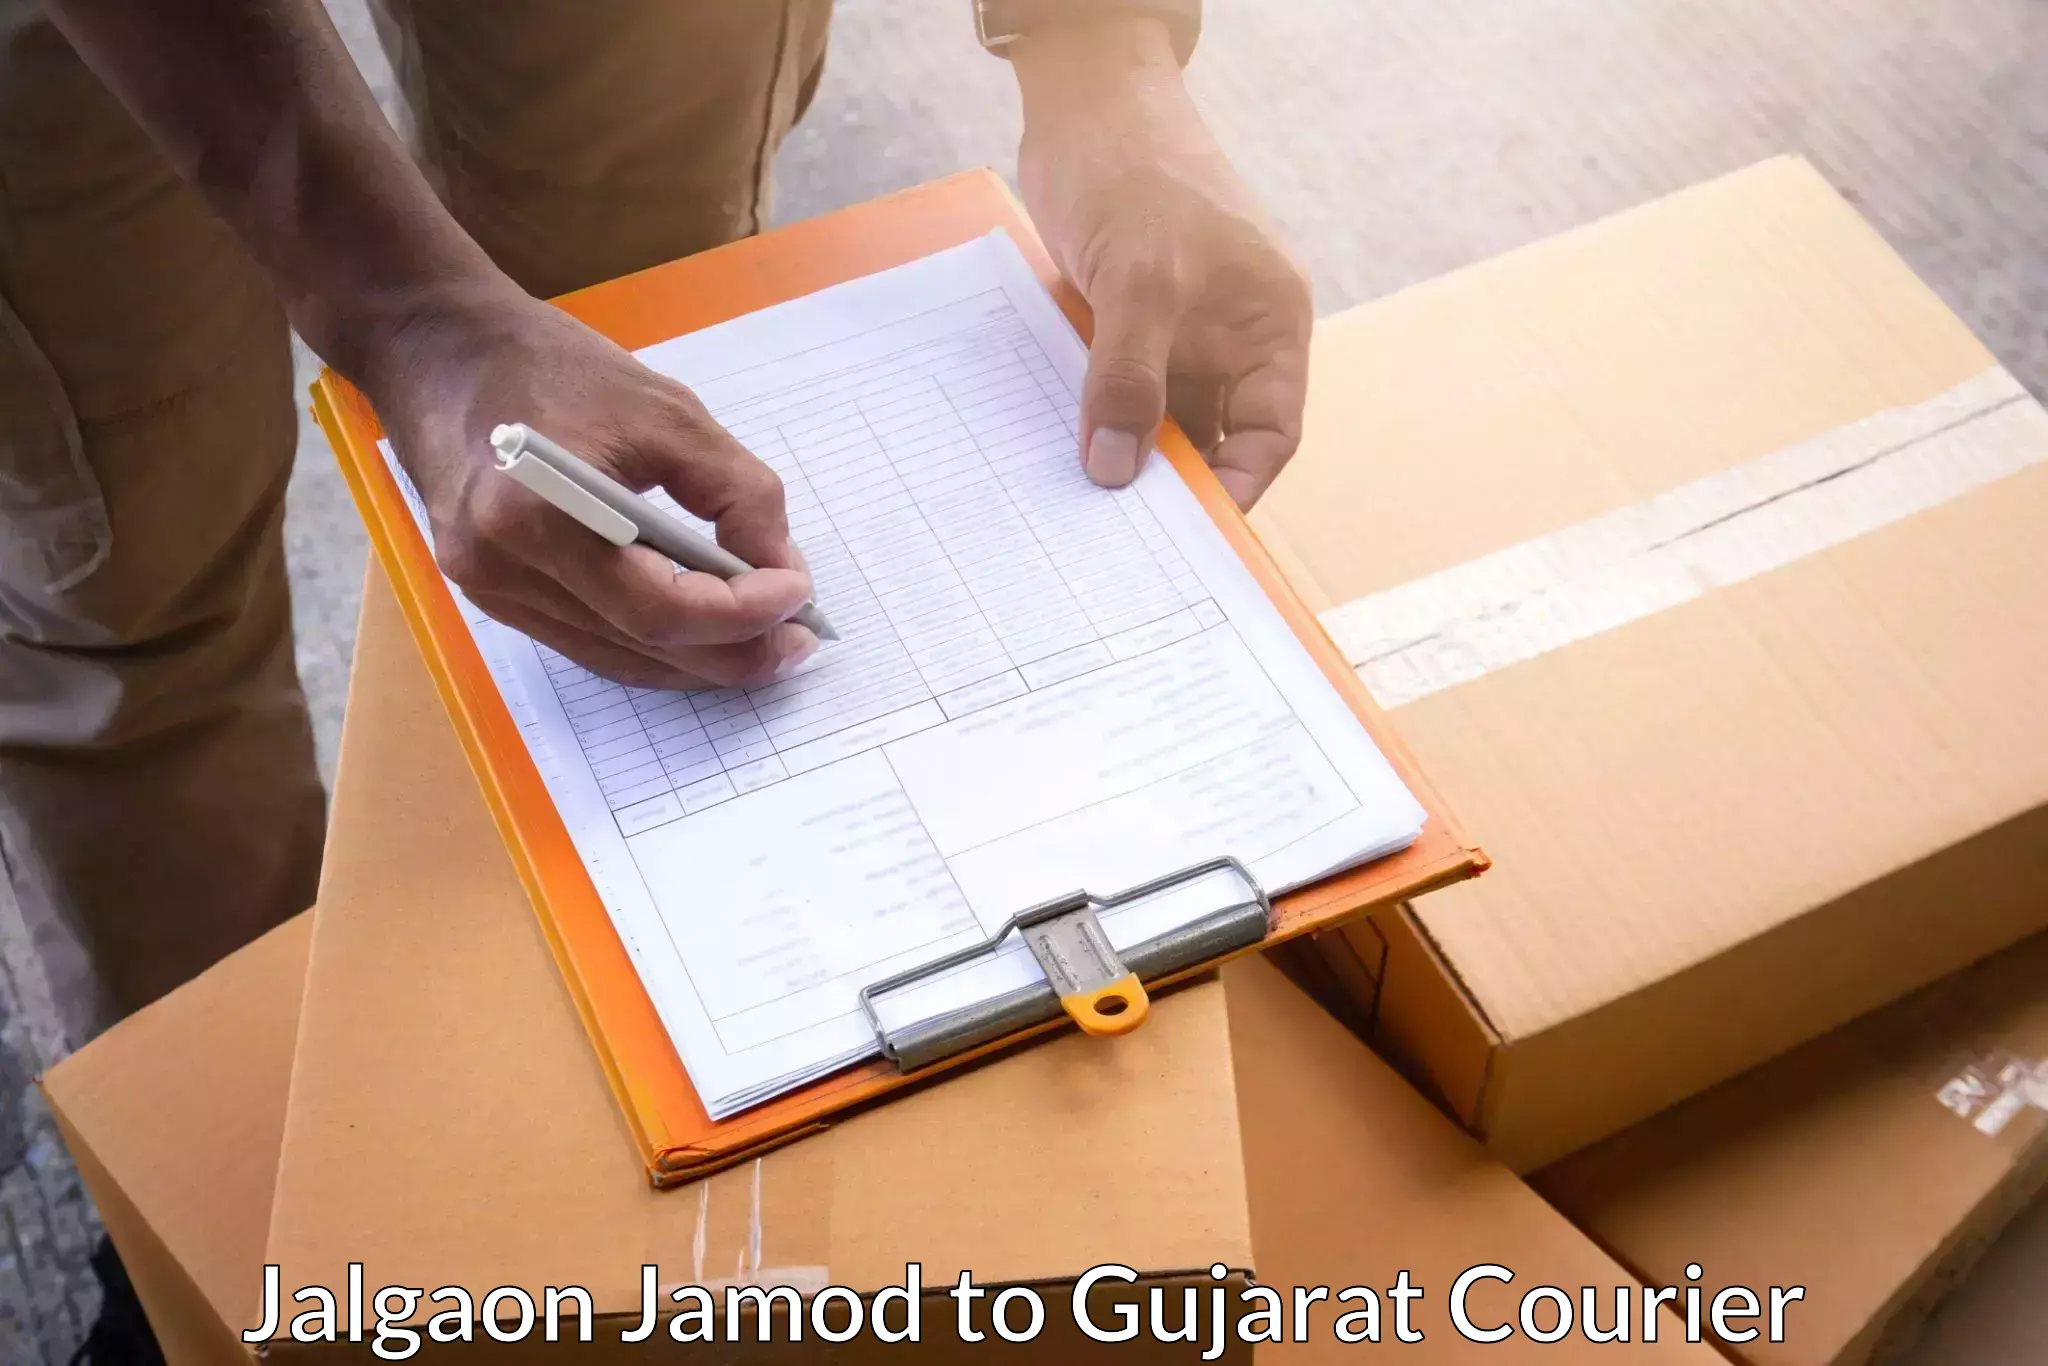 Specialized shipment handling in Jalgaon Jamod to Palanpur